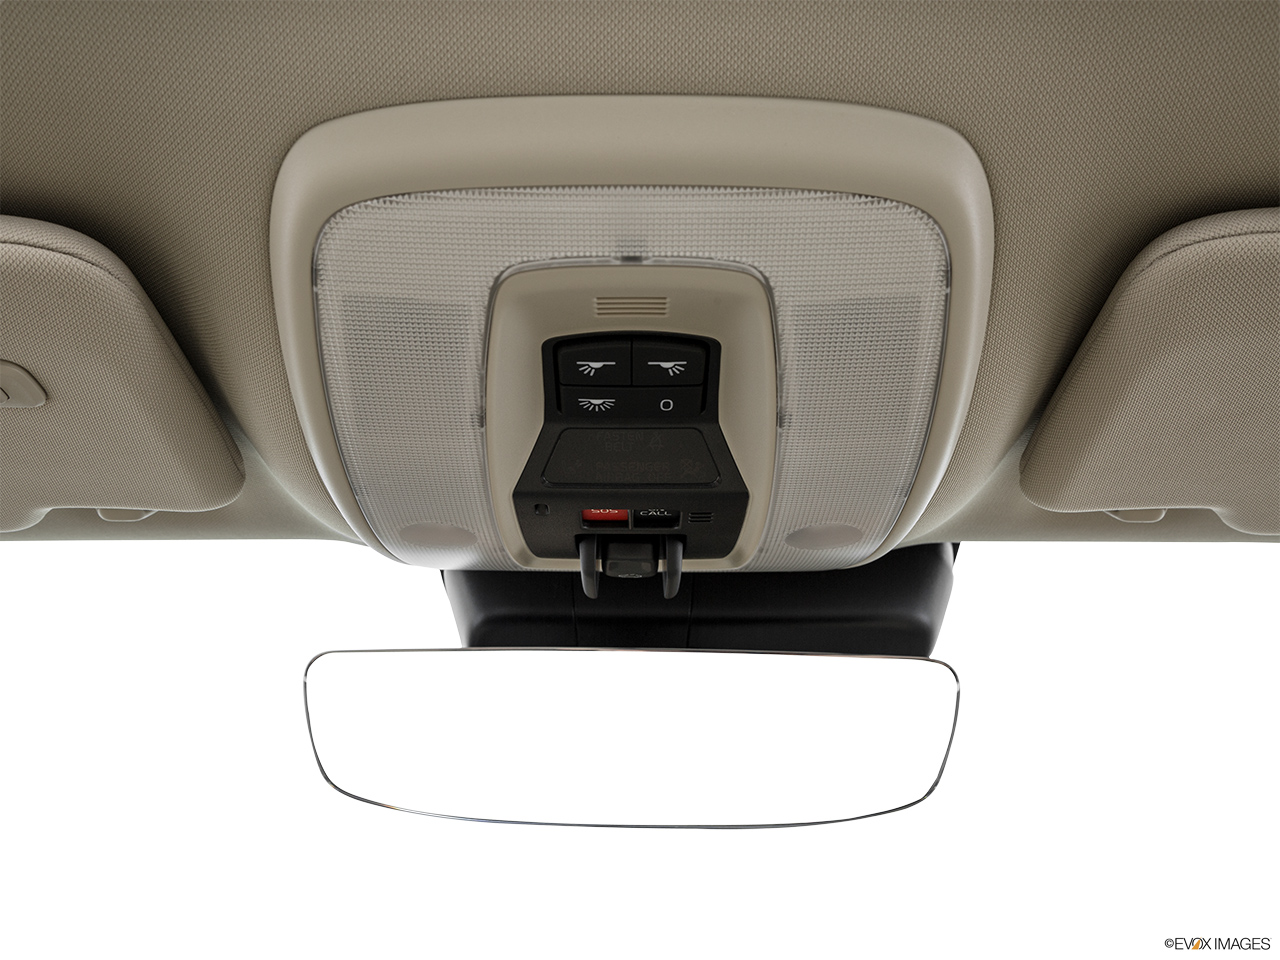 2016 Volvo S60 T5 Drive-E FWD Premier Courtesy lamps/ceiling controls. 